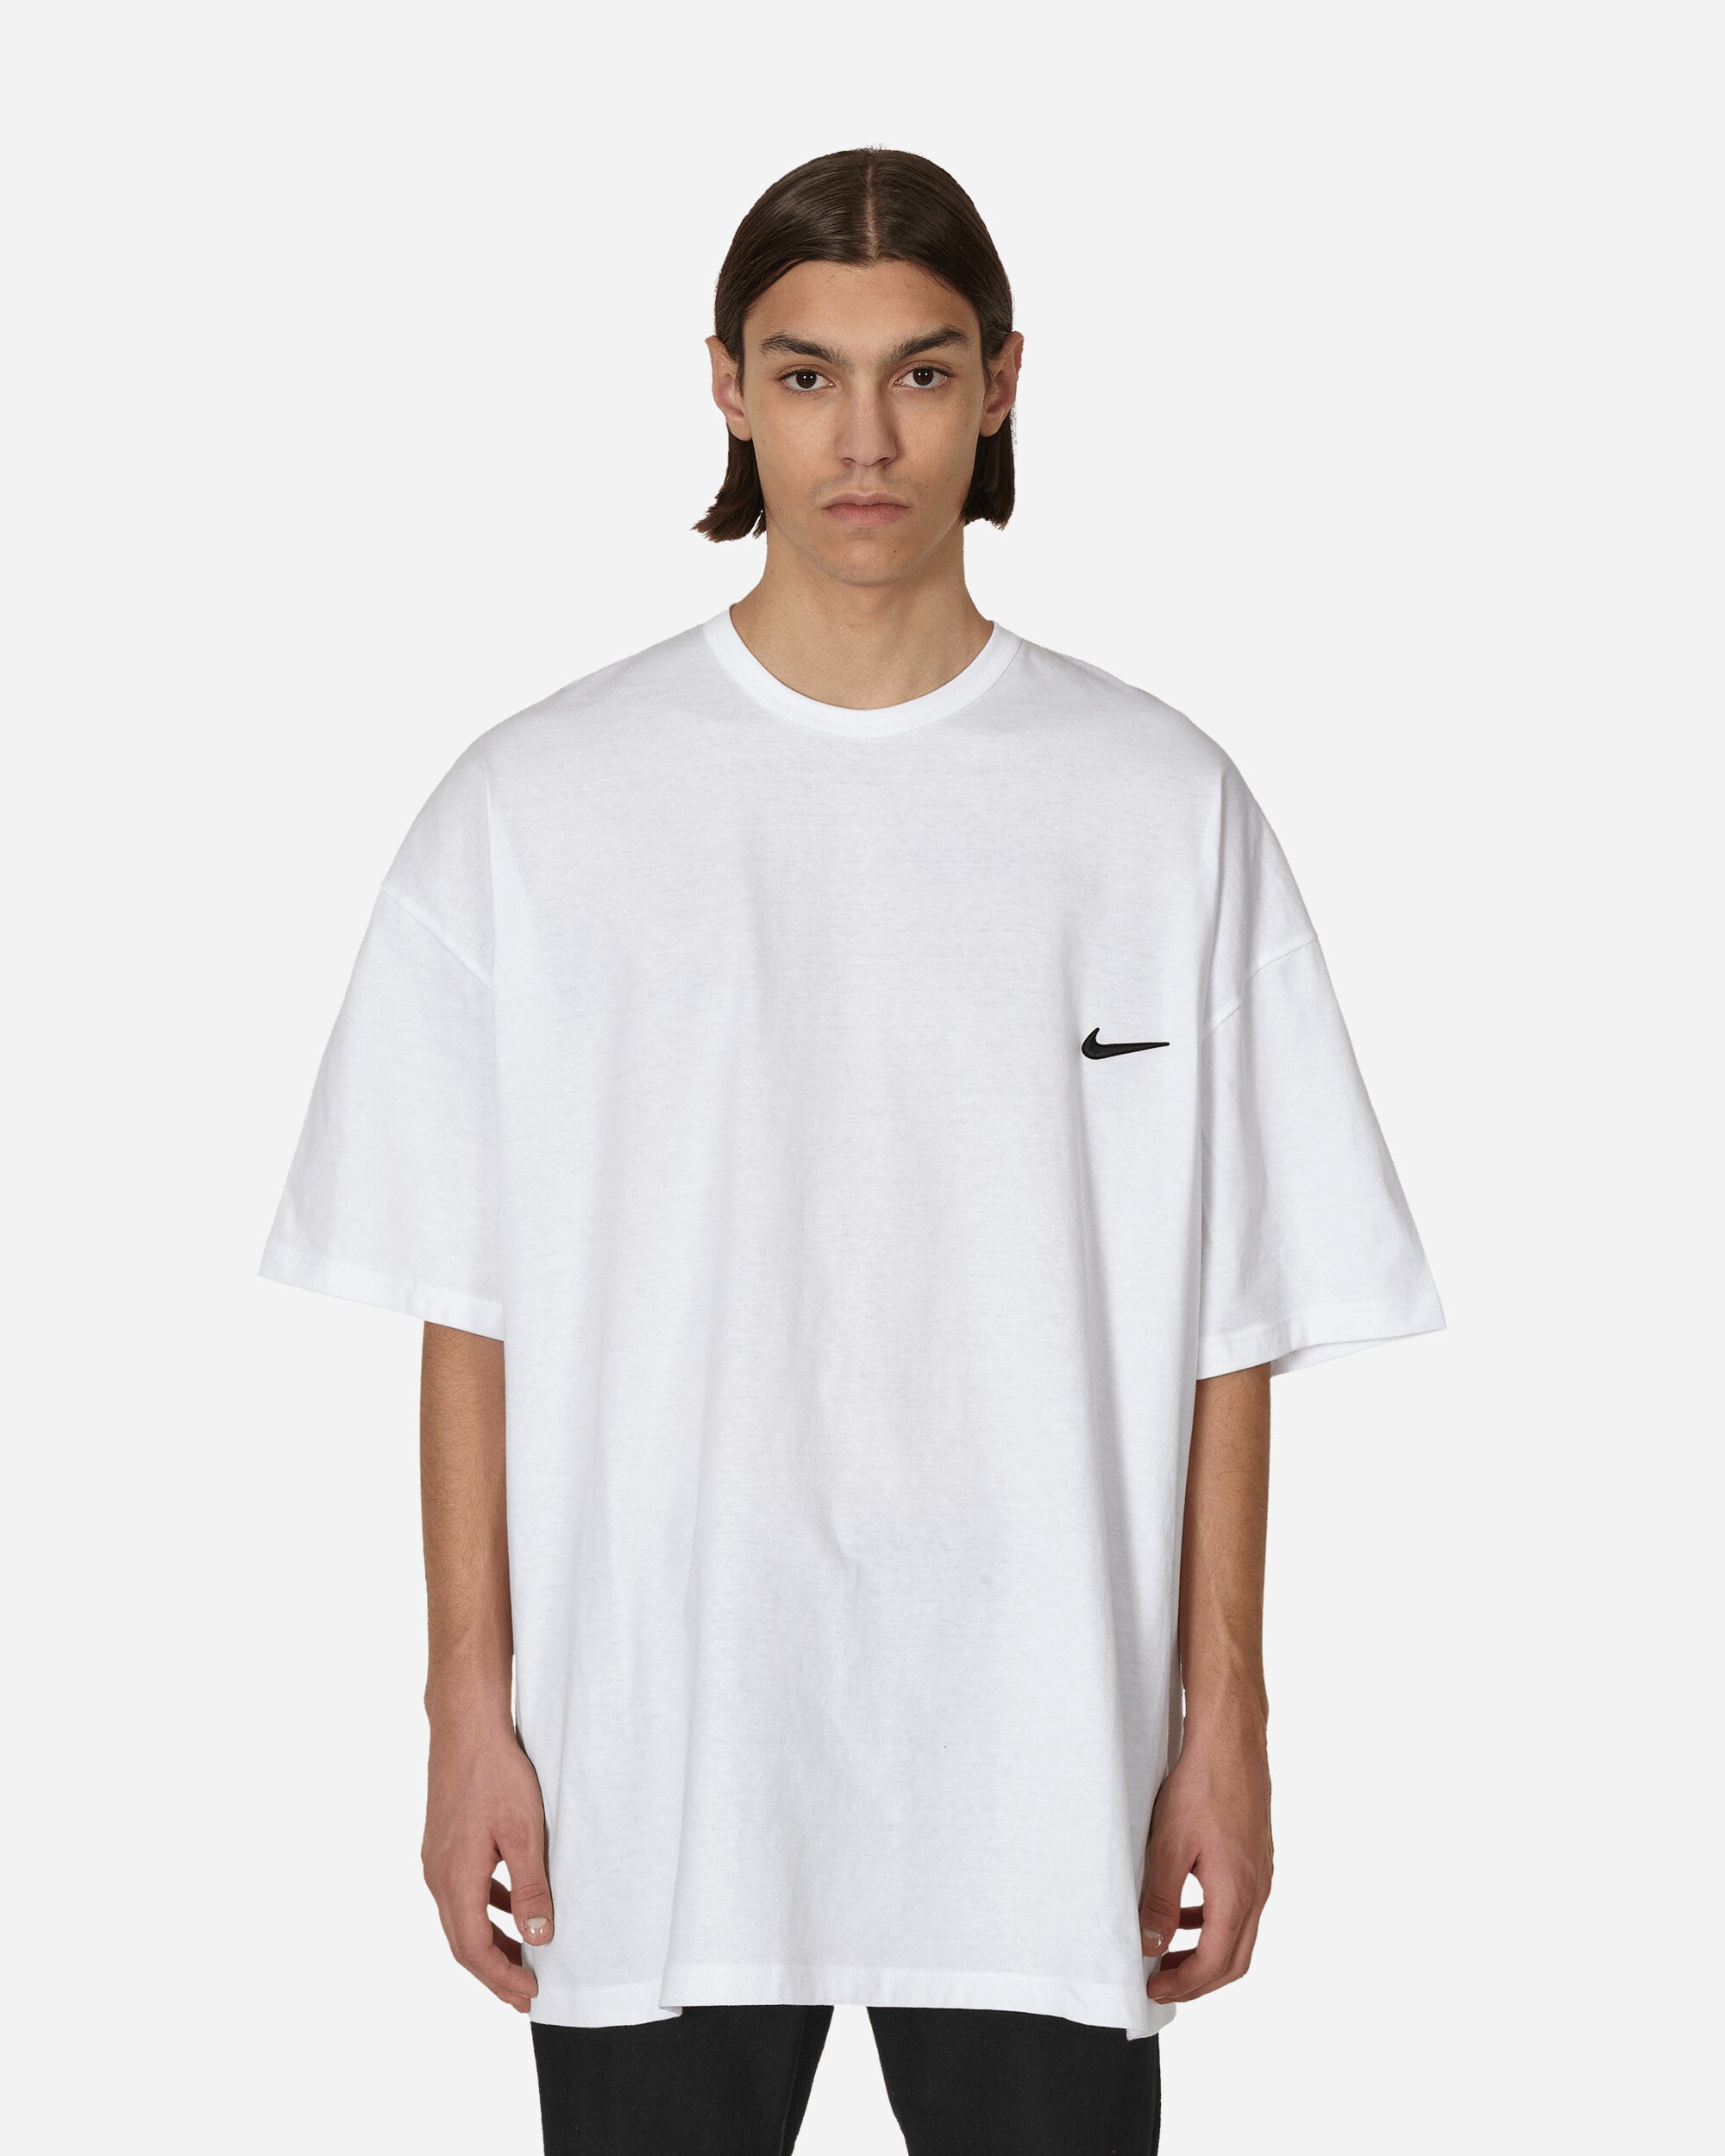 Comme Des Garçons Black T-Shirt White/Black T-Shirts Shortsleeve 1K-T105-S23 2